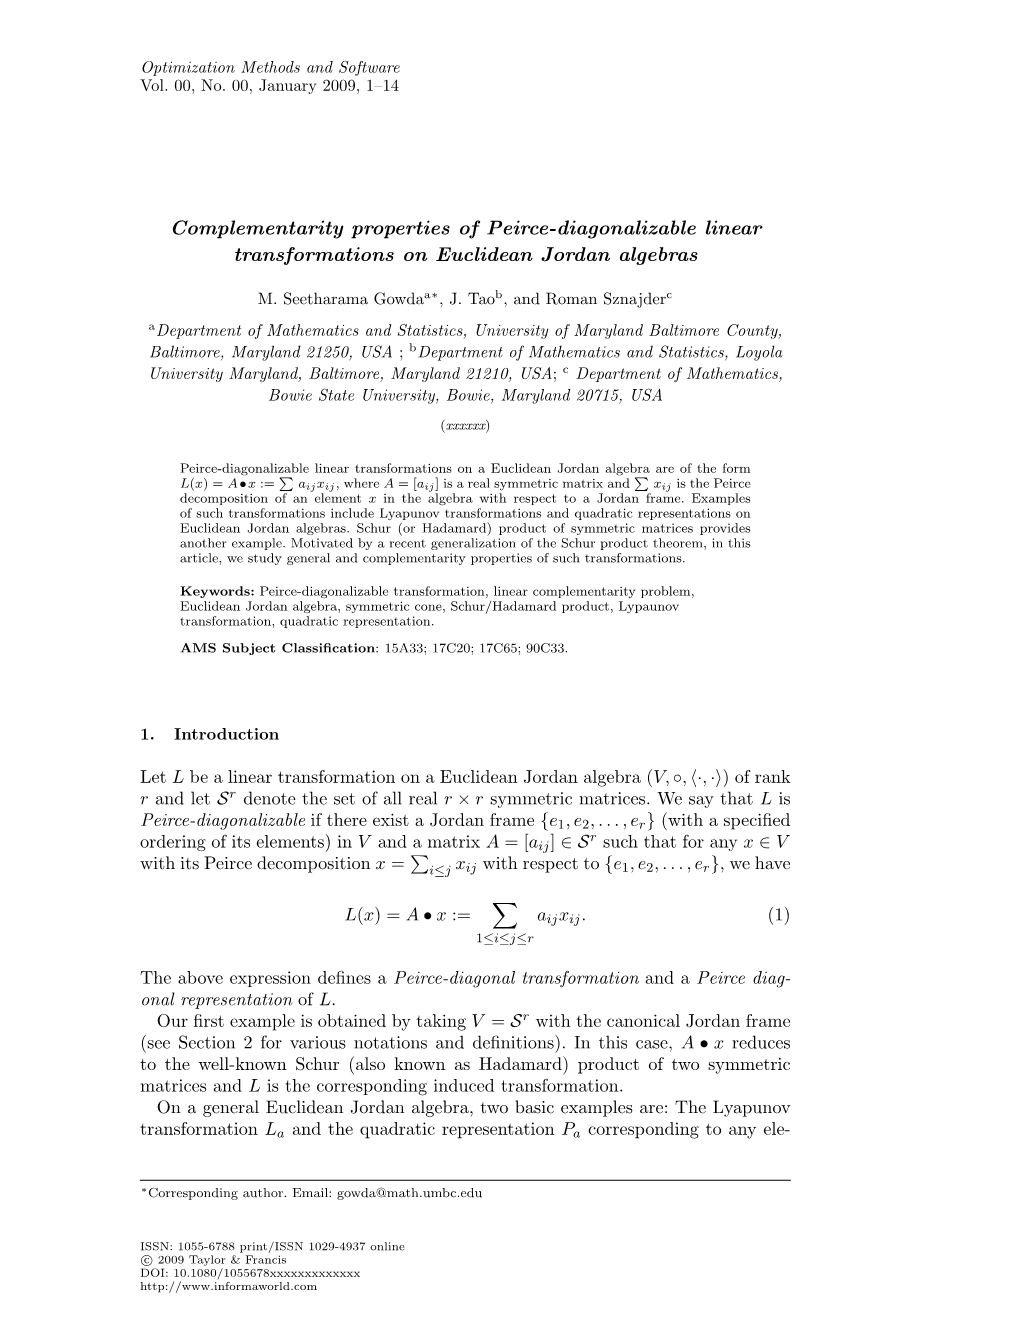 Complementarity Properties of Peirce-Diagonalizable Linear Transformations on Euclidean Jordan Algebras